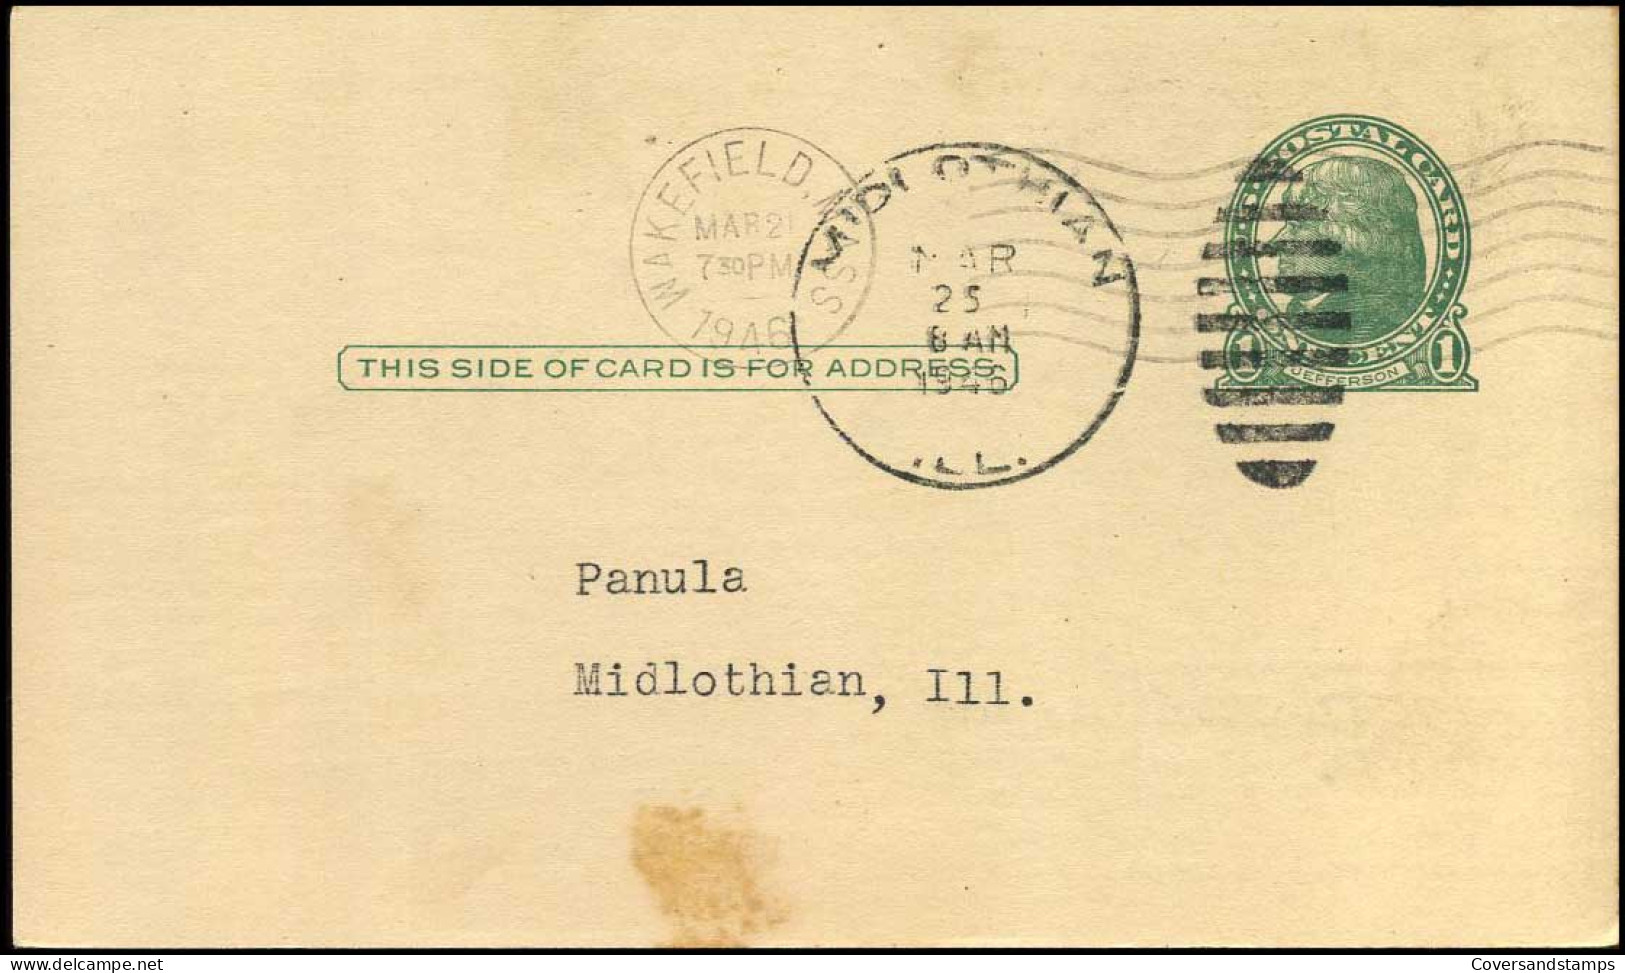 Postal Stationary - From Midlothian, Illinois - 1921-40